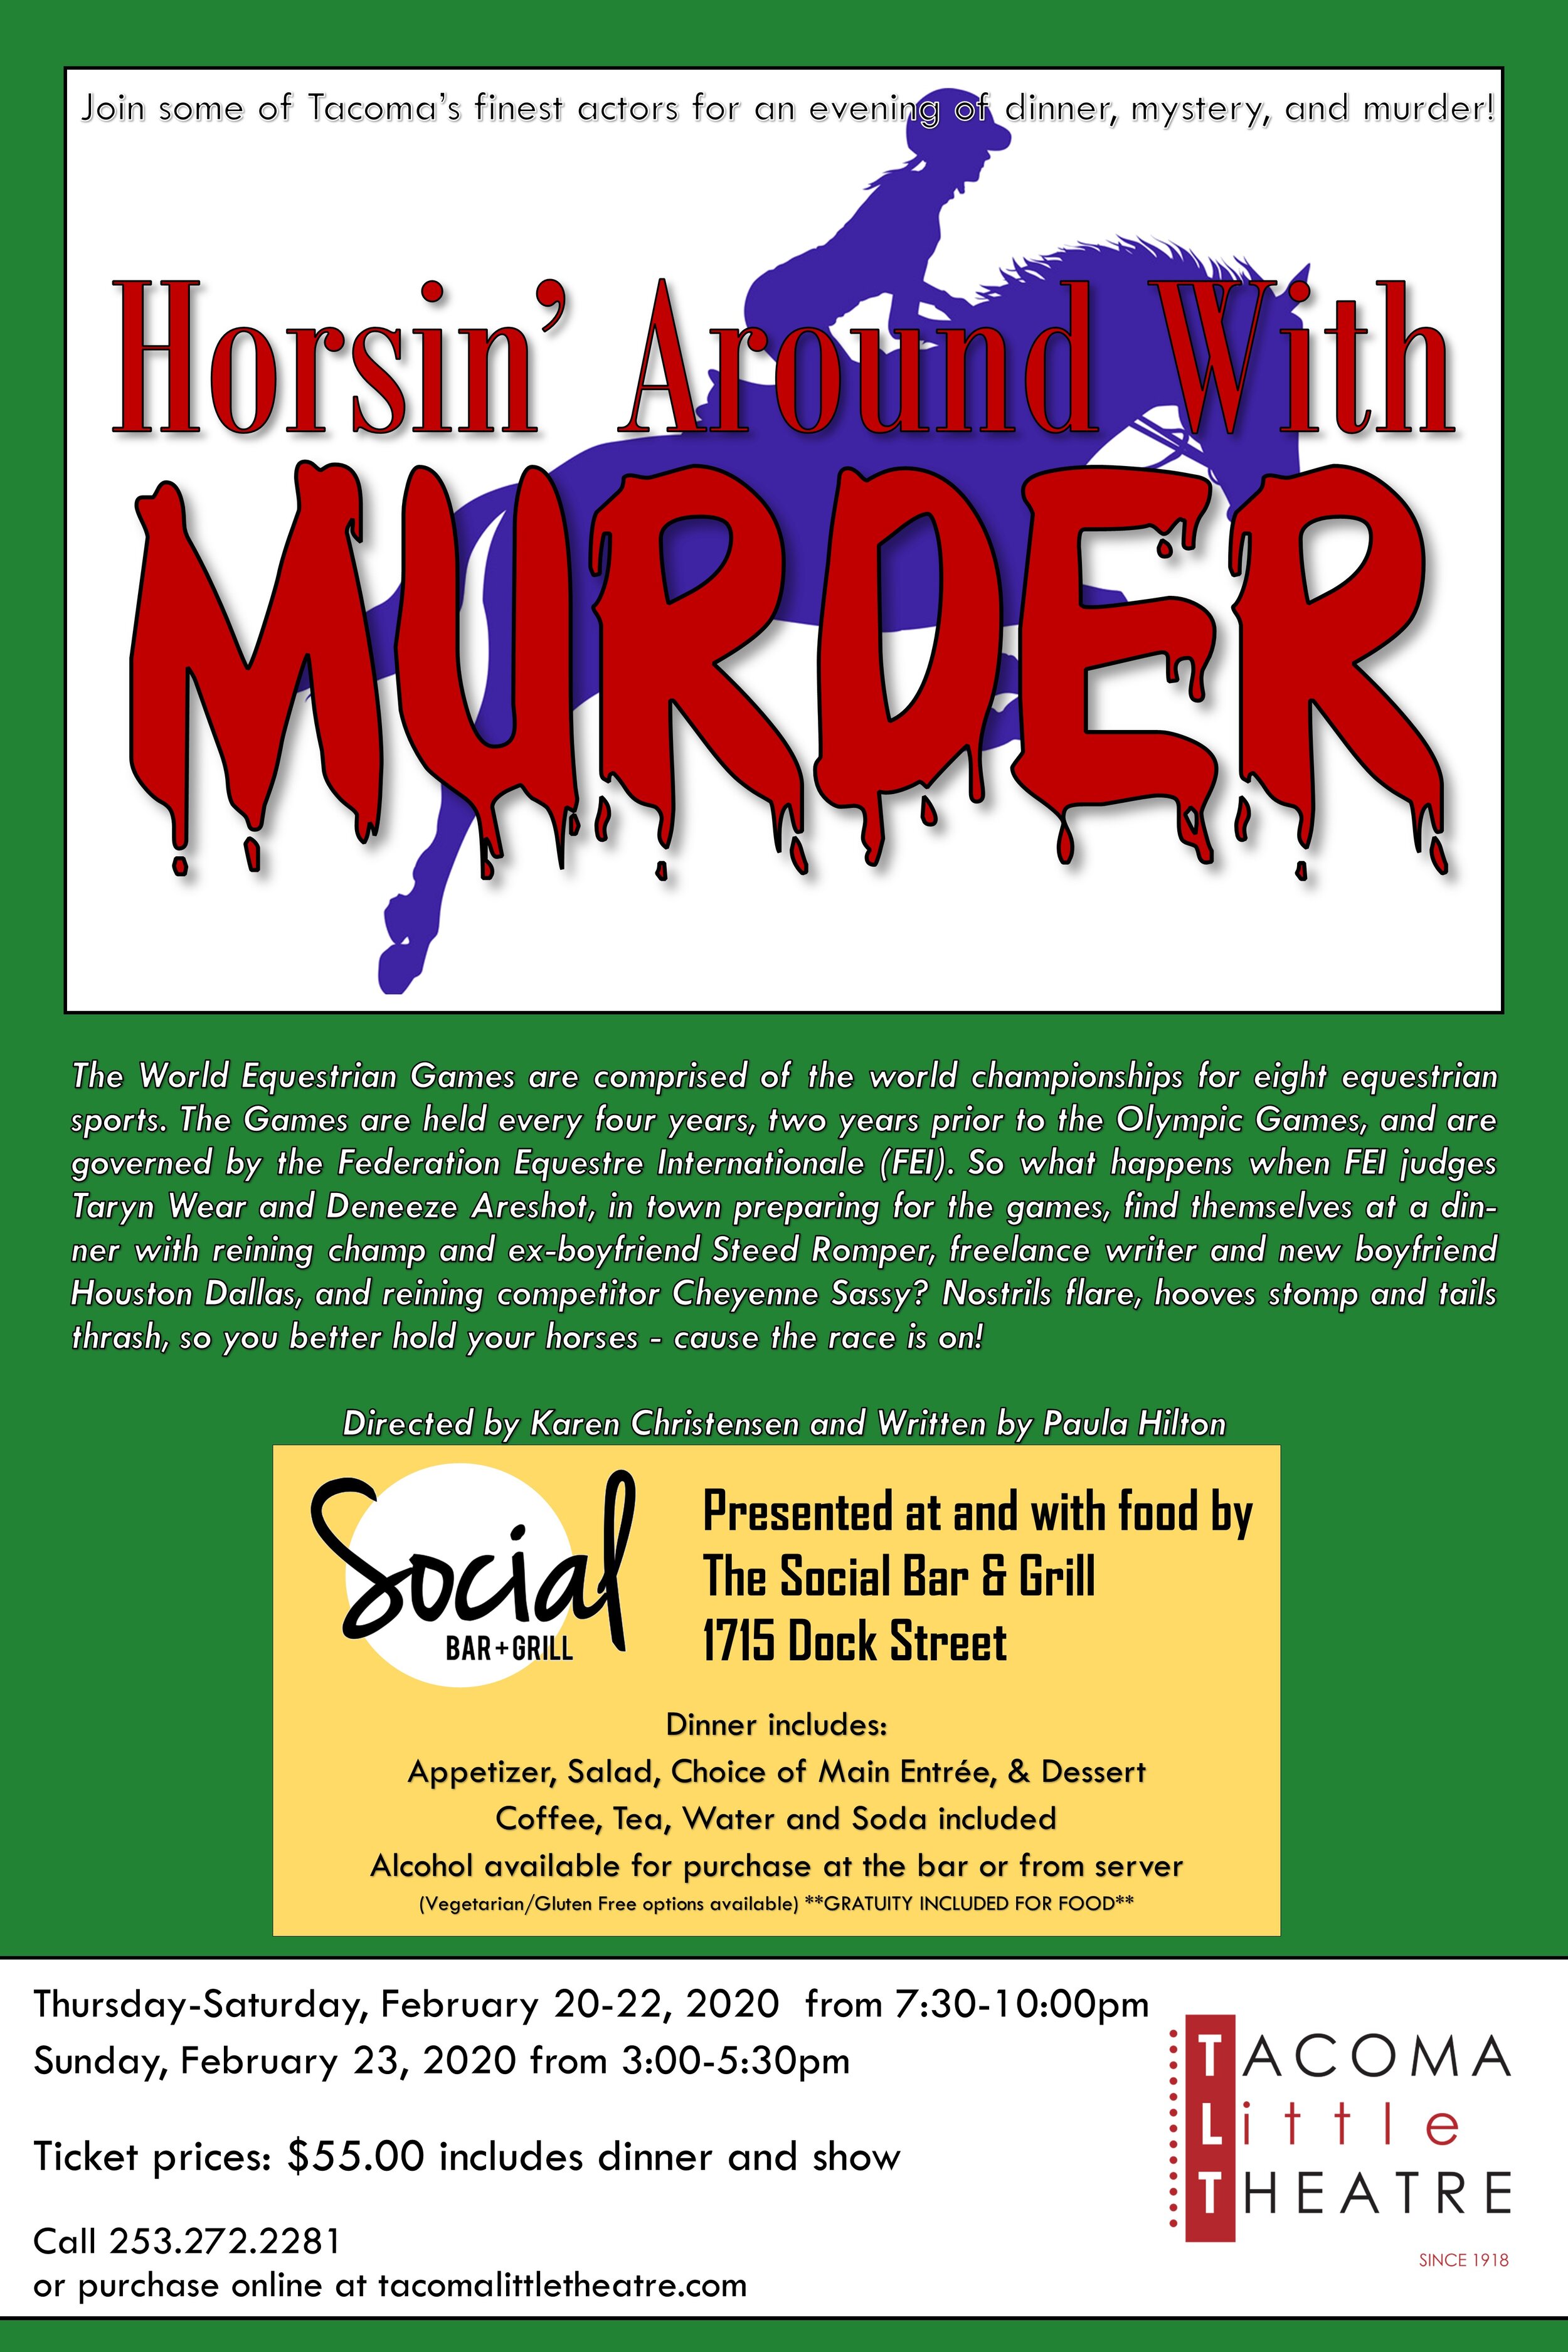 Horsin Around With Murder A Murder Mystery Dinner Tacoma